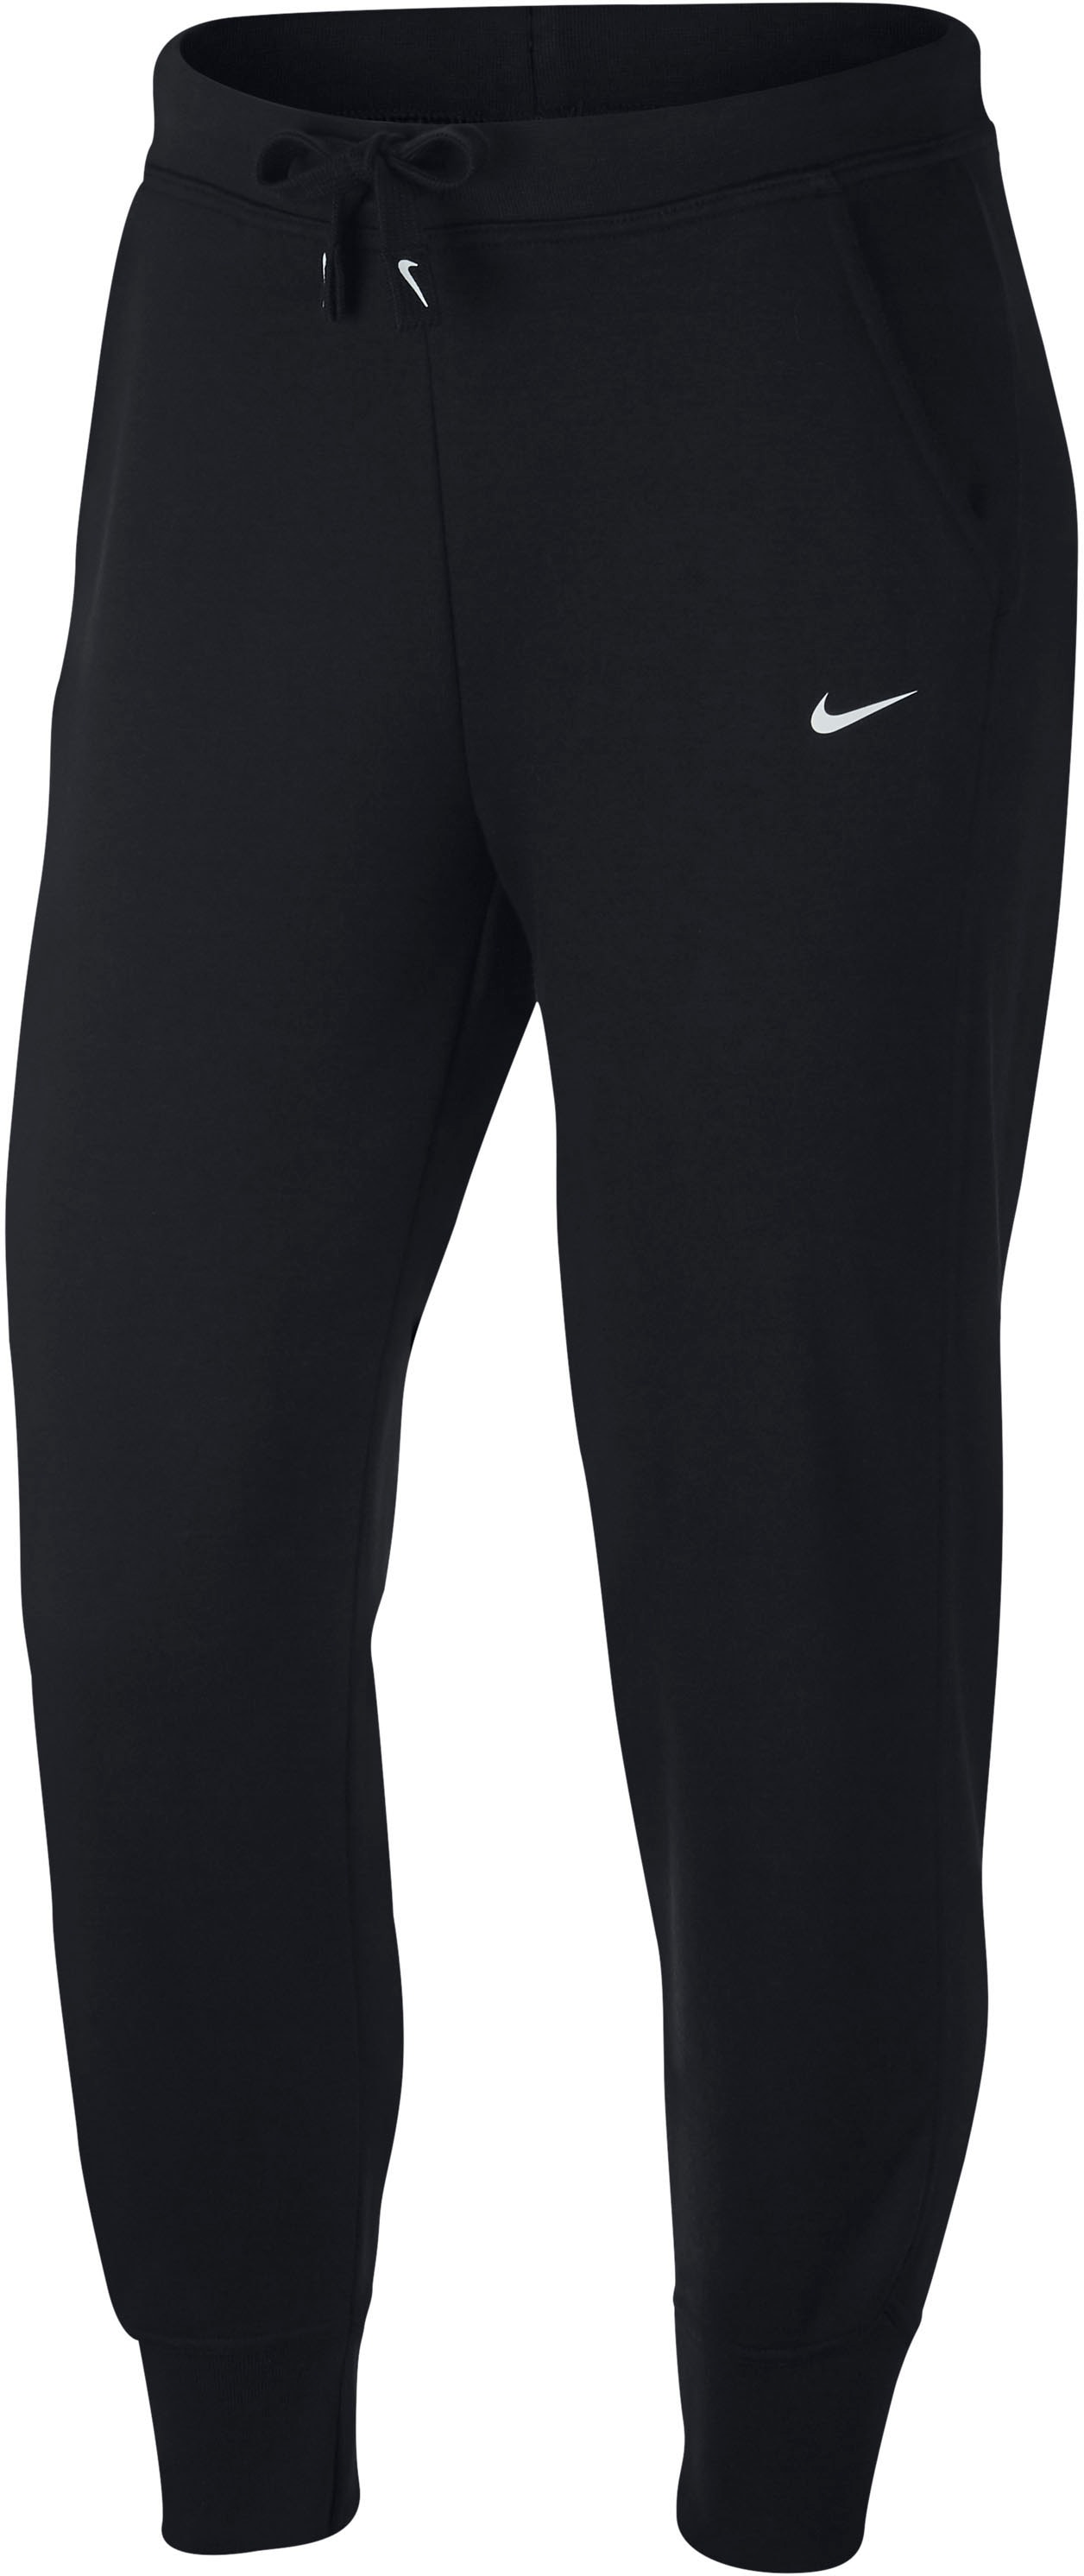 Nike Trainingshose »Dri-fit Get Fit Women's Training Pants«